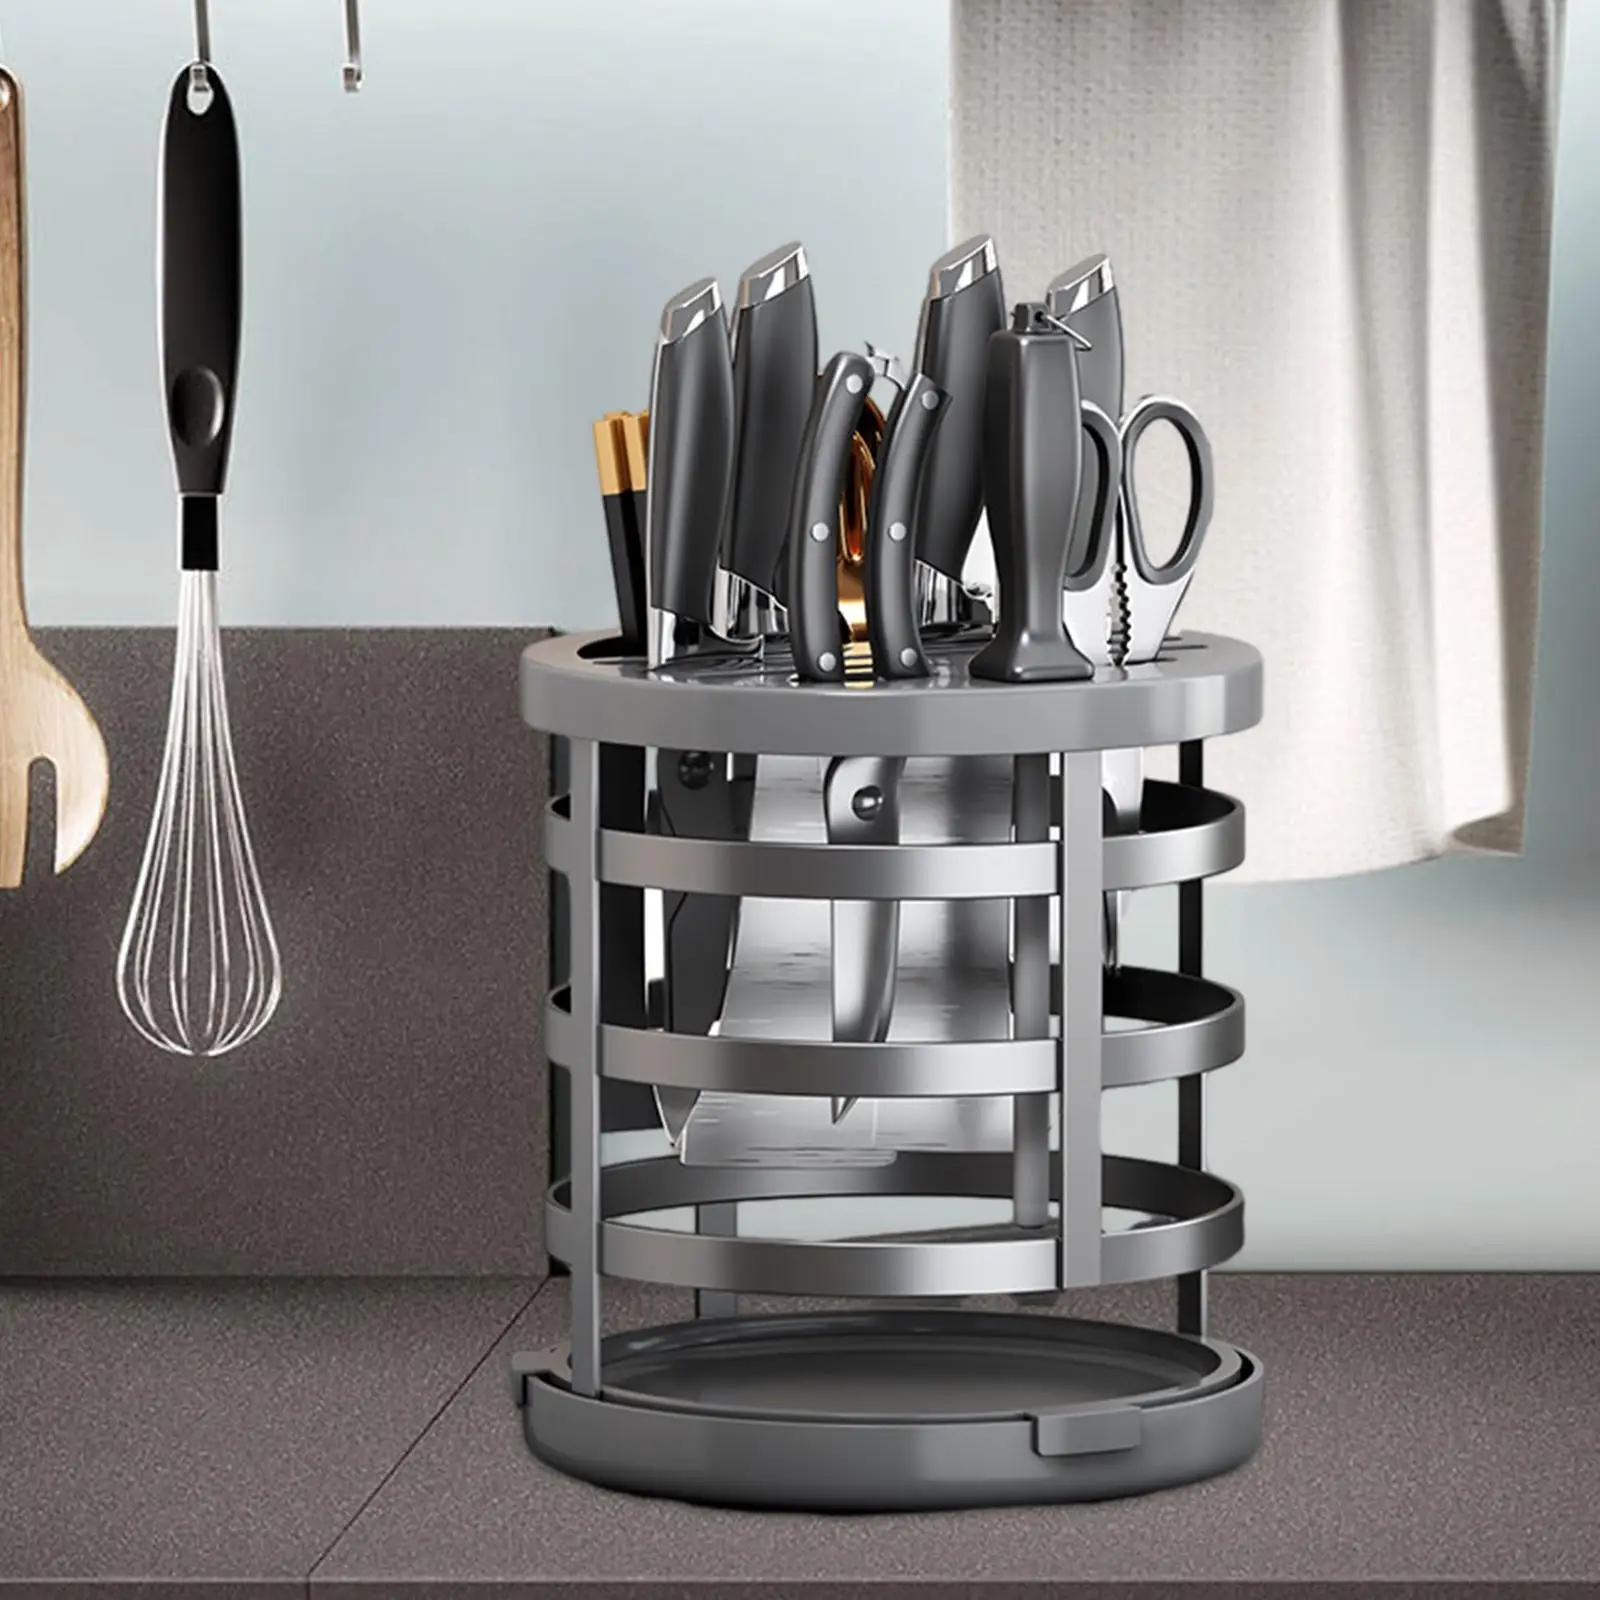 Round Knife Holder Stand Flatware Drying Shelf 360 Degree Rotation Storage Organizer for Restaurant Dining Room Kitchen Counter